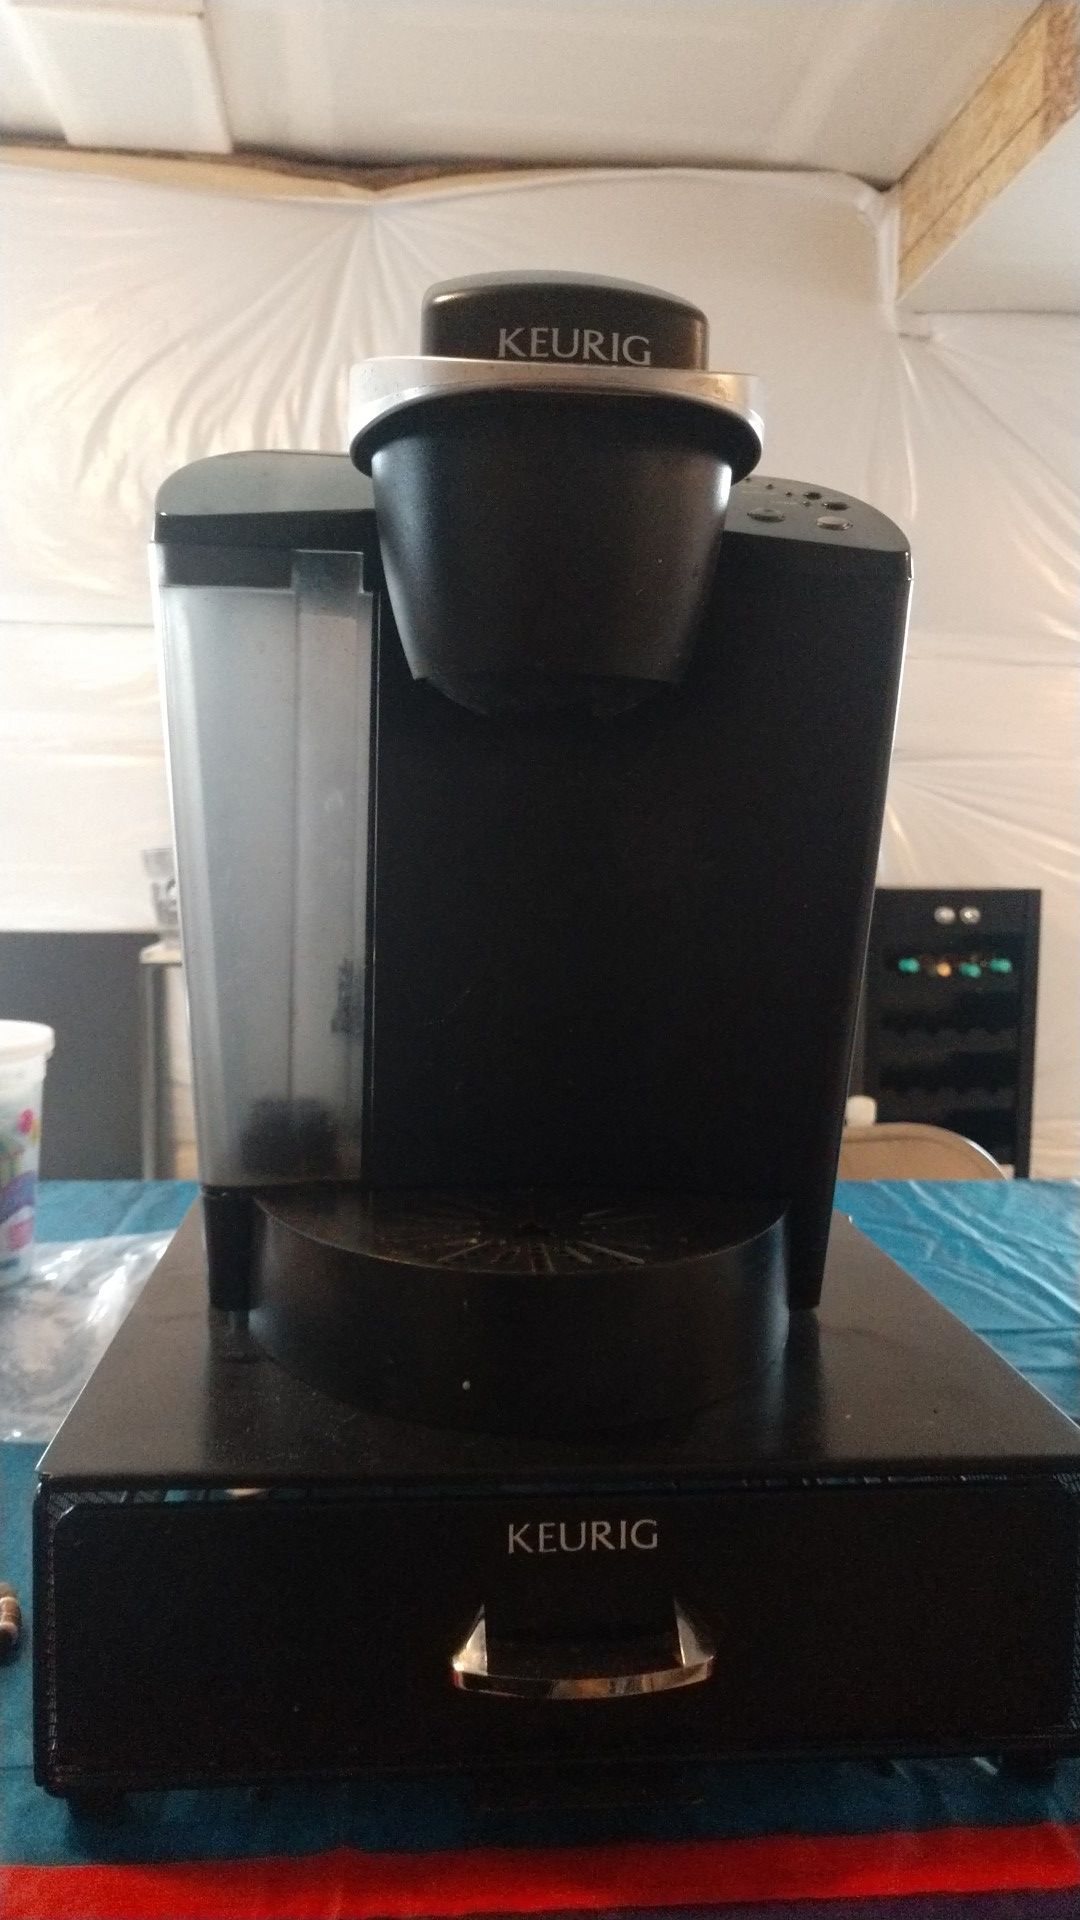 Keurig coffee maker with coffee pod drawer